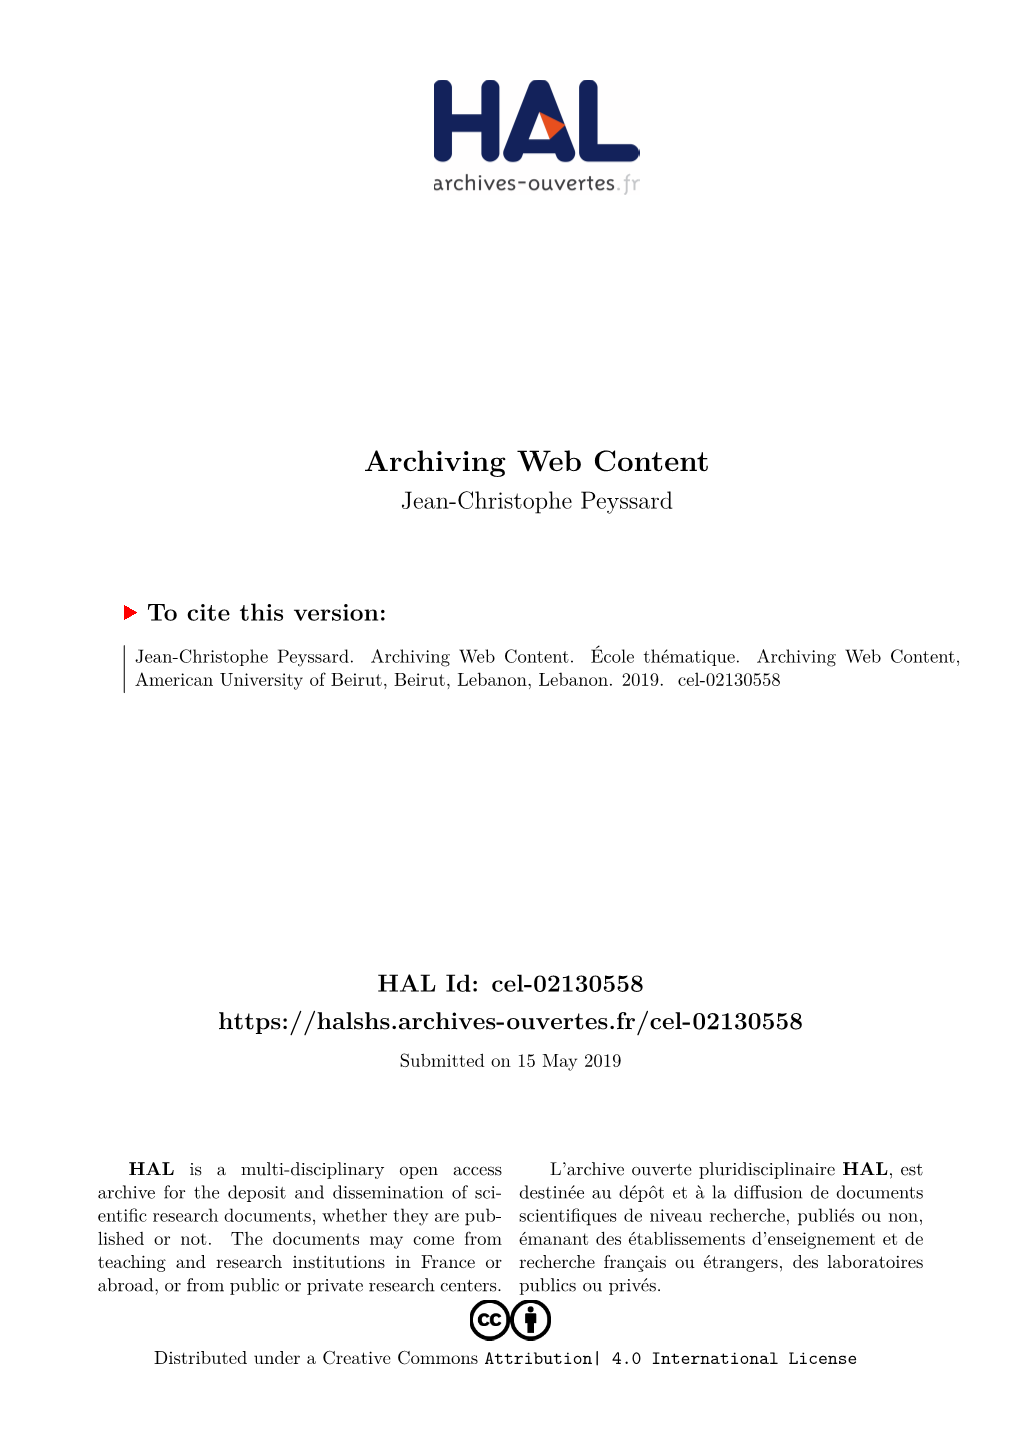 Archiving Web Content Jean-Christophe Peyssard